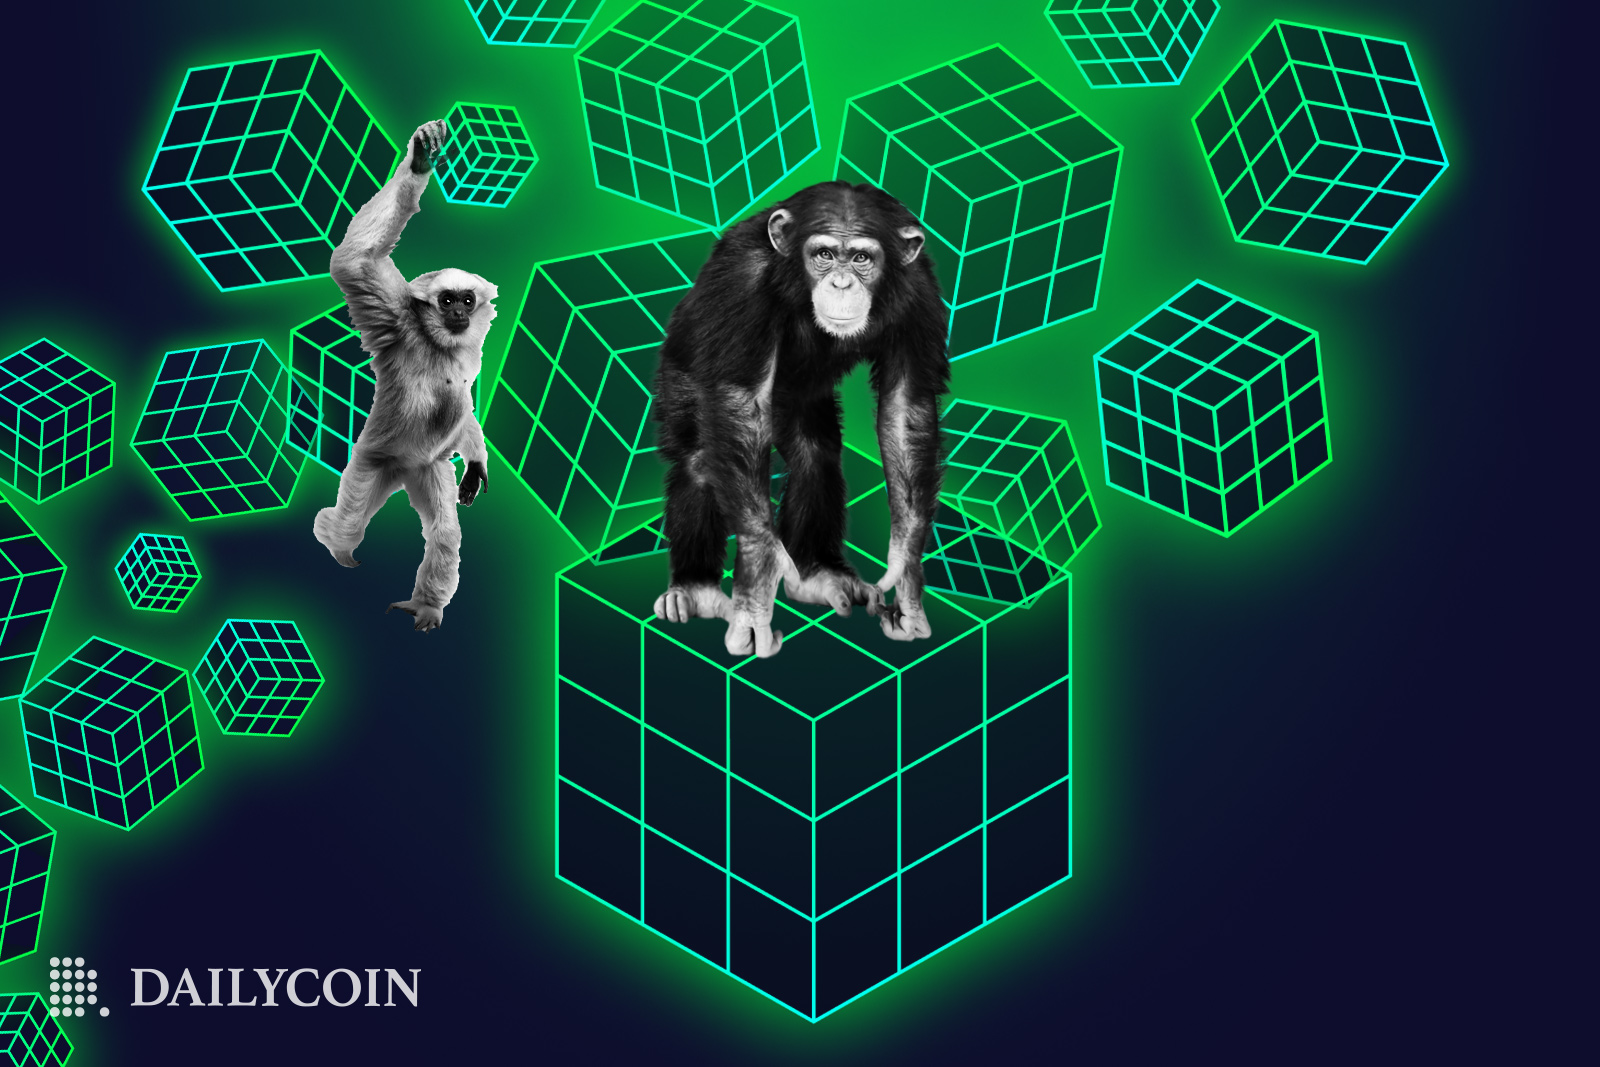 Monkeys playing around on floating Rubik's cubes